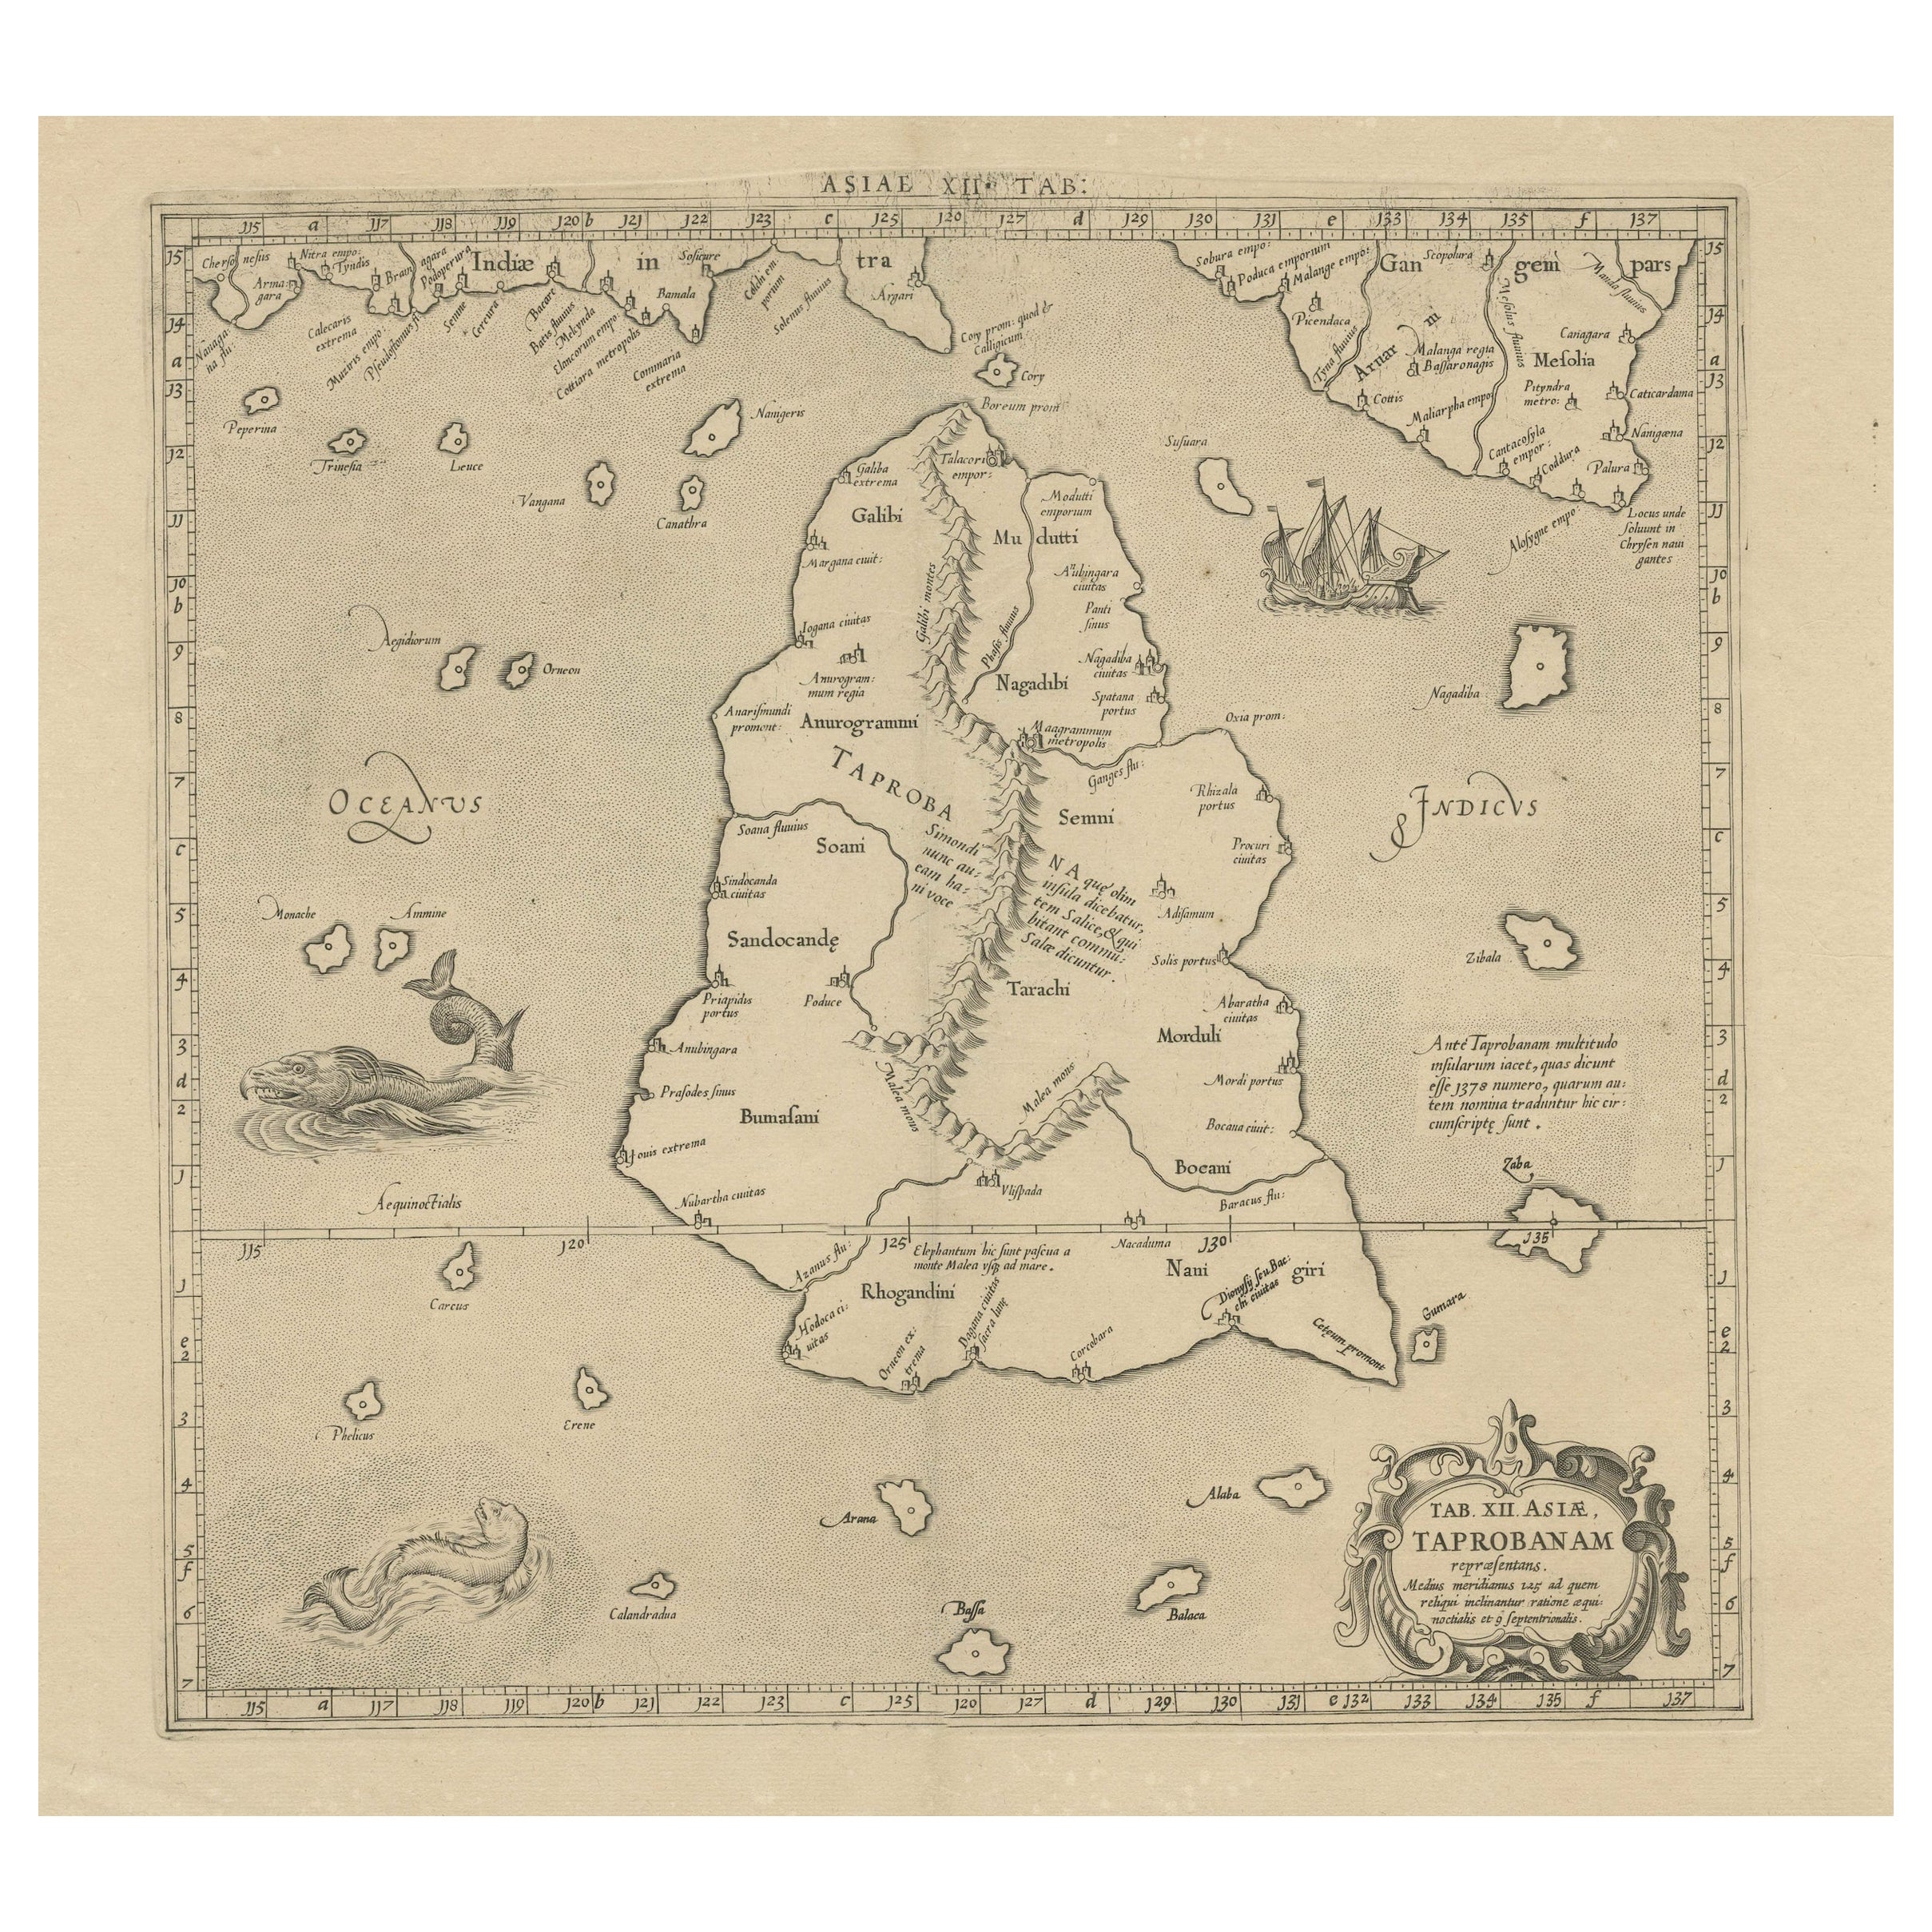 Rare Original Antique Ptolemy Map of Ceylon, Present Day Sri Lanka